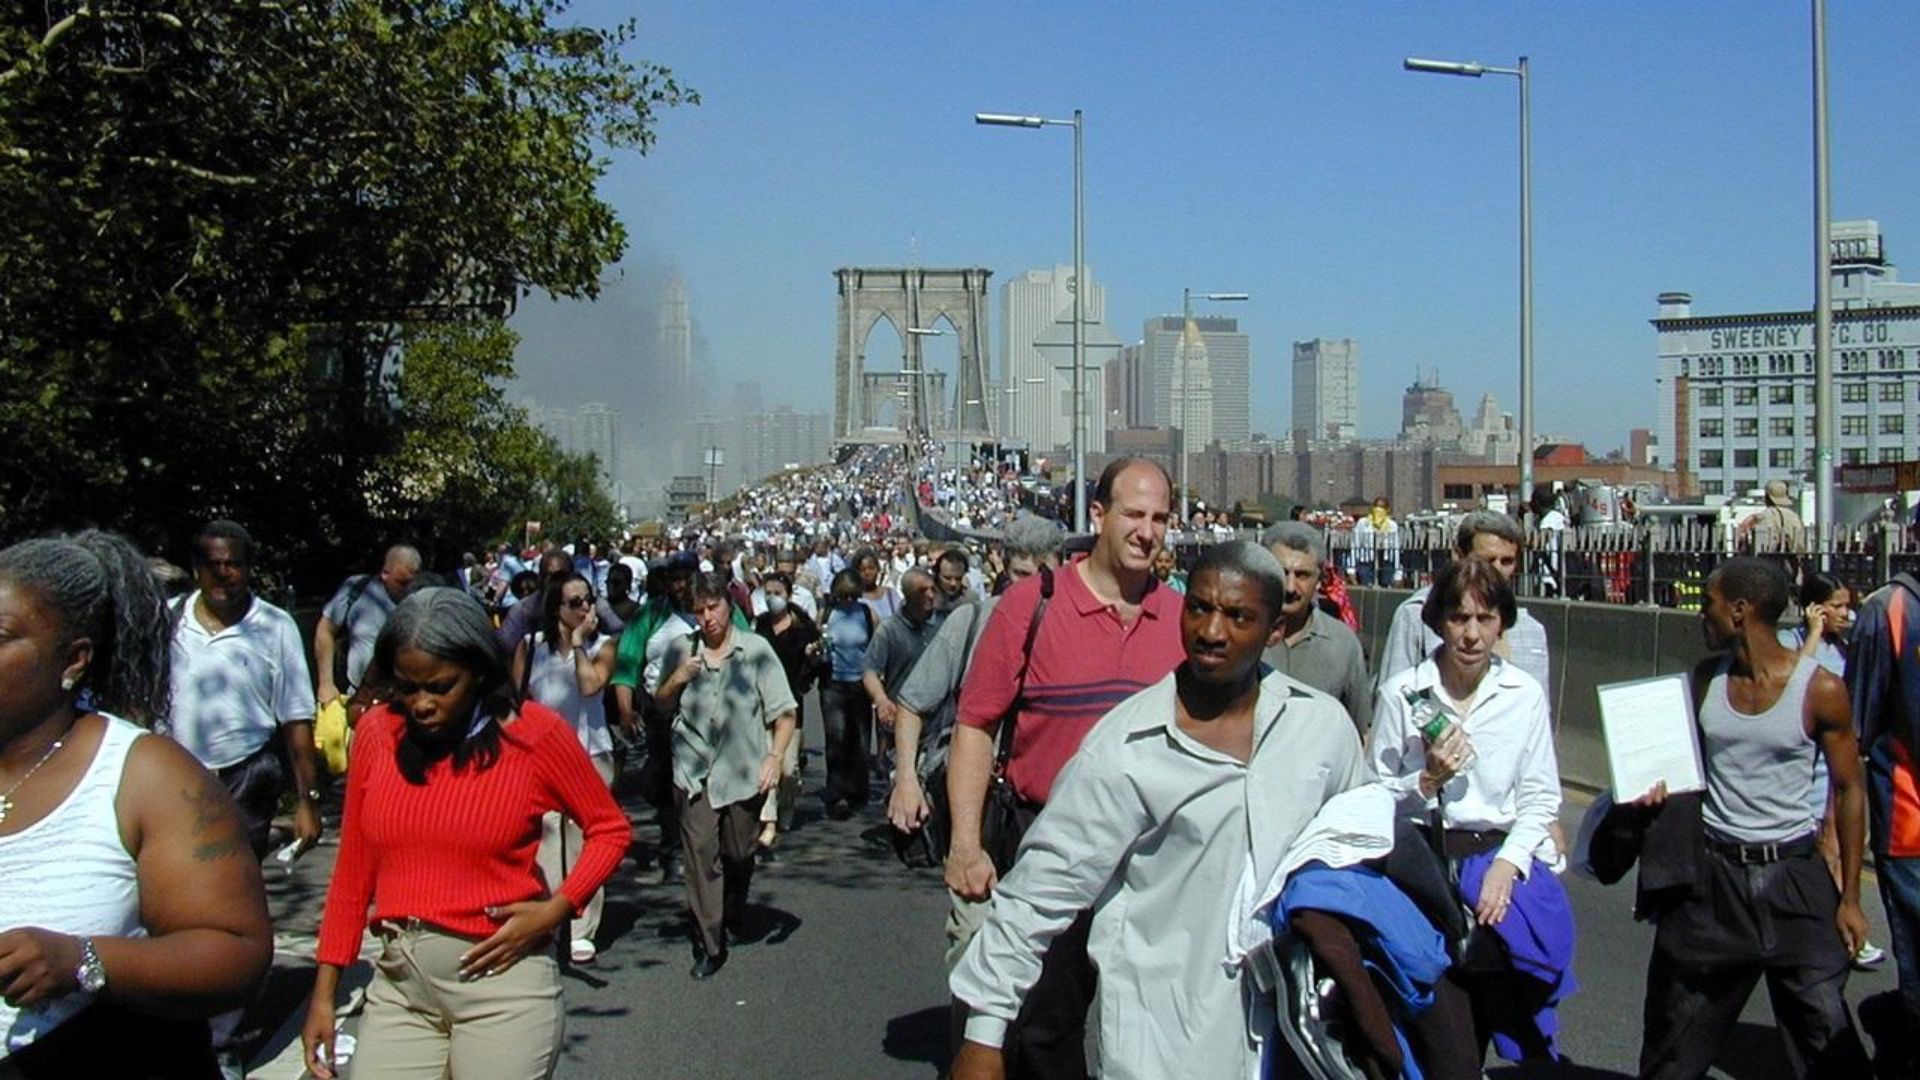 Crowds of people flee via the Brooklyn Bridge with lower Manhattan's smoke-covered skyline behind them 